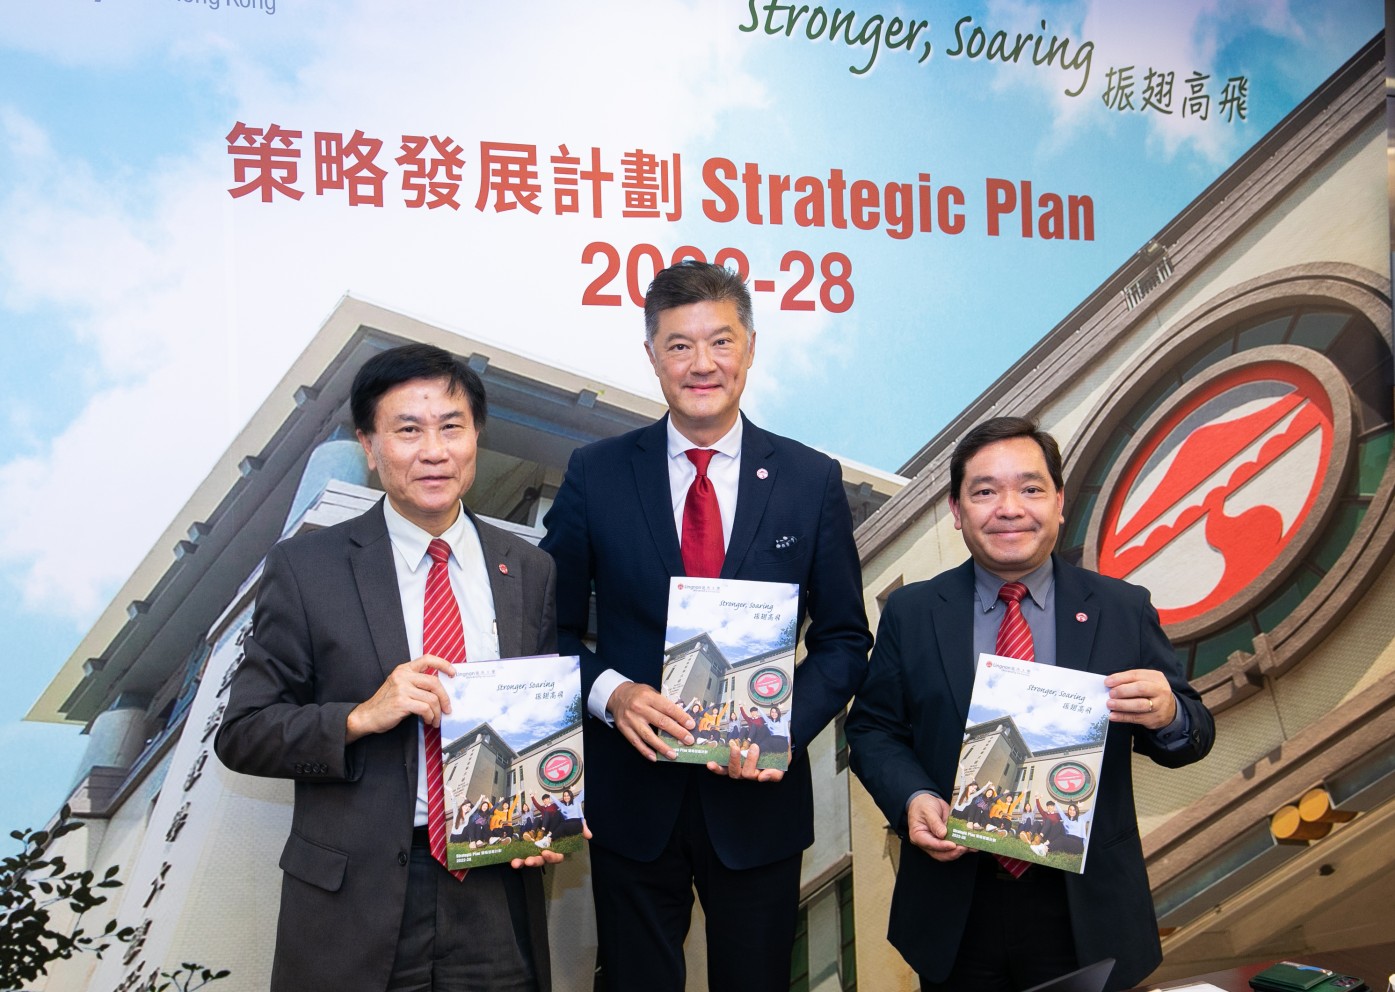 Prof Leonard K Cheng, President of LU (left), Mr Andrew Yao Cho-fai, Council Chairman of LU (middle), Prof Joshua Mok Ka-ho, Vice-President of LU (right) announce LU’s Strategic Plan for 2022-28.